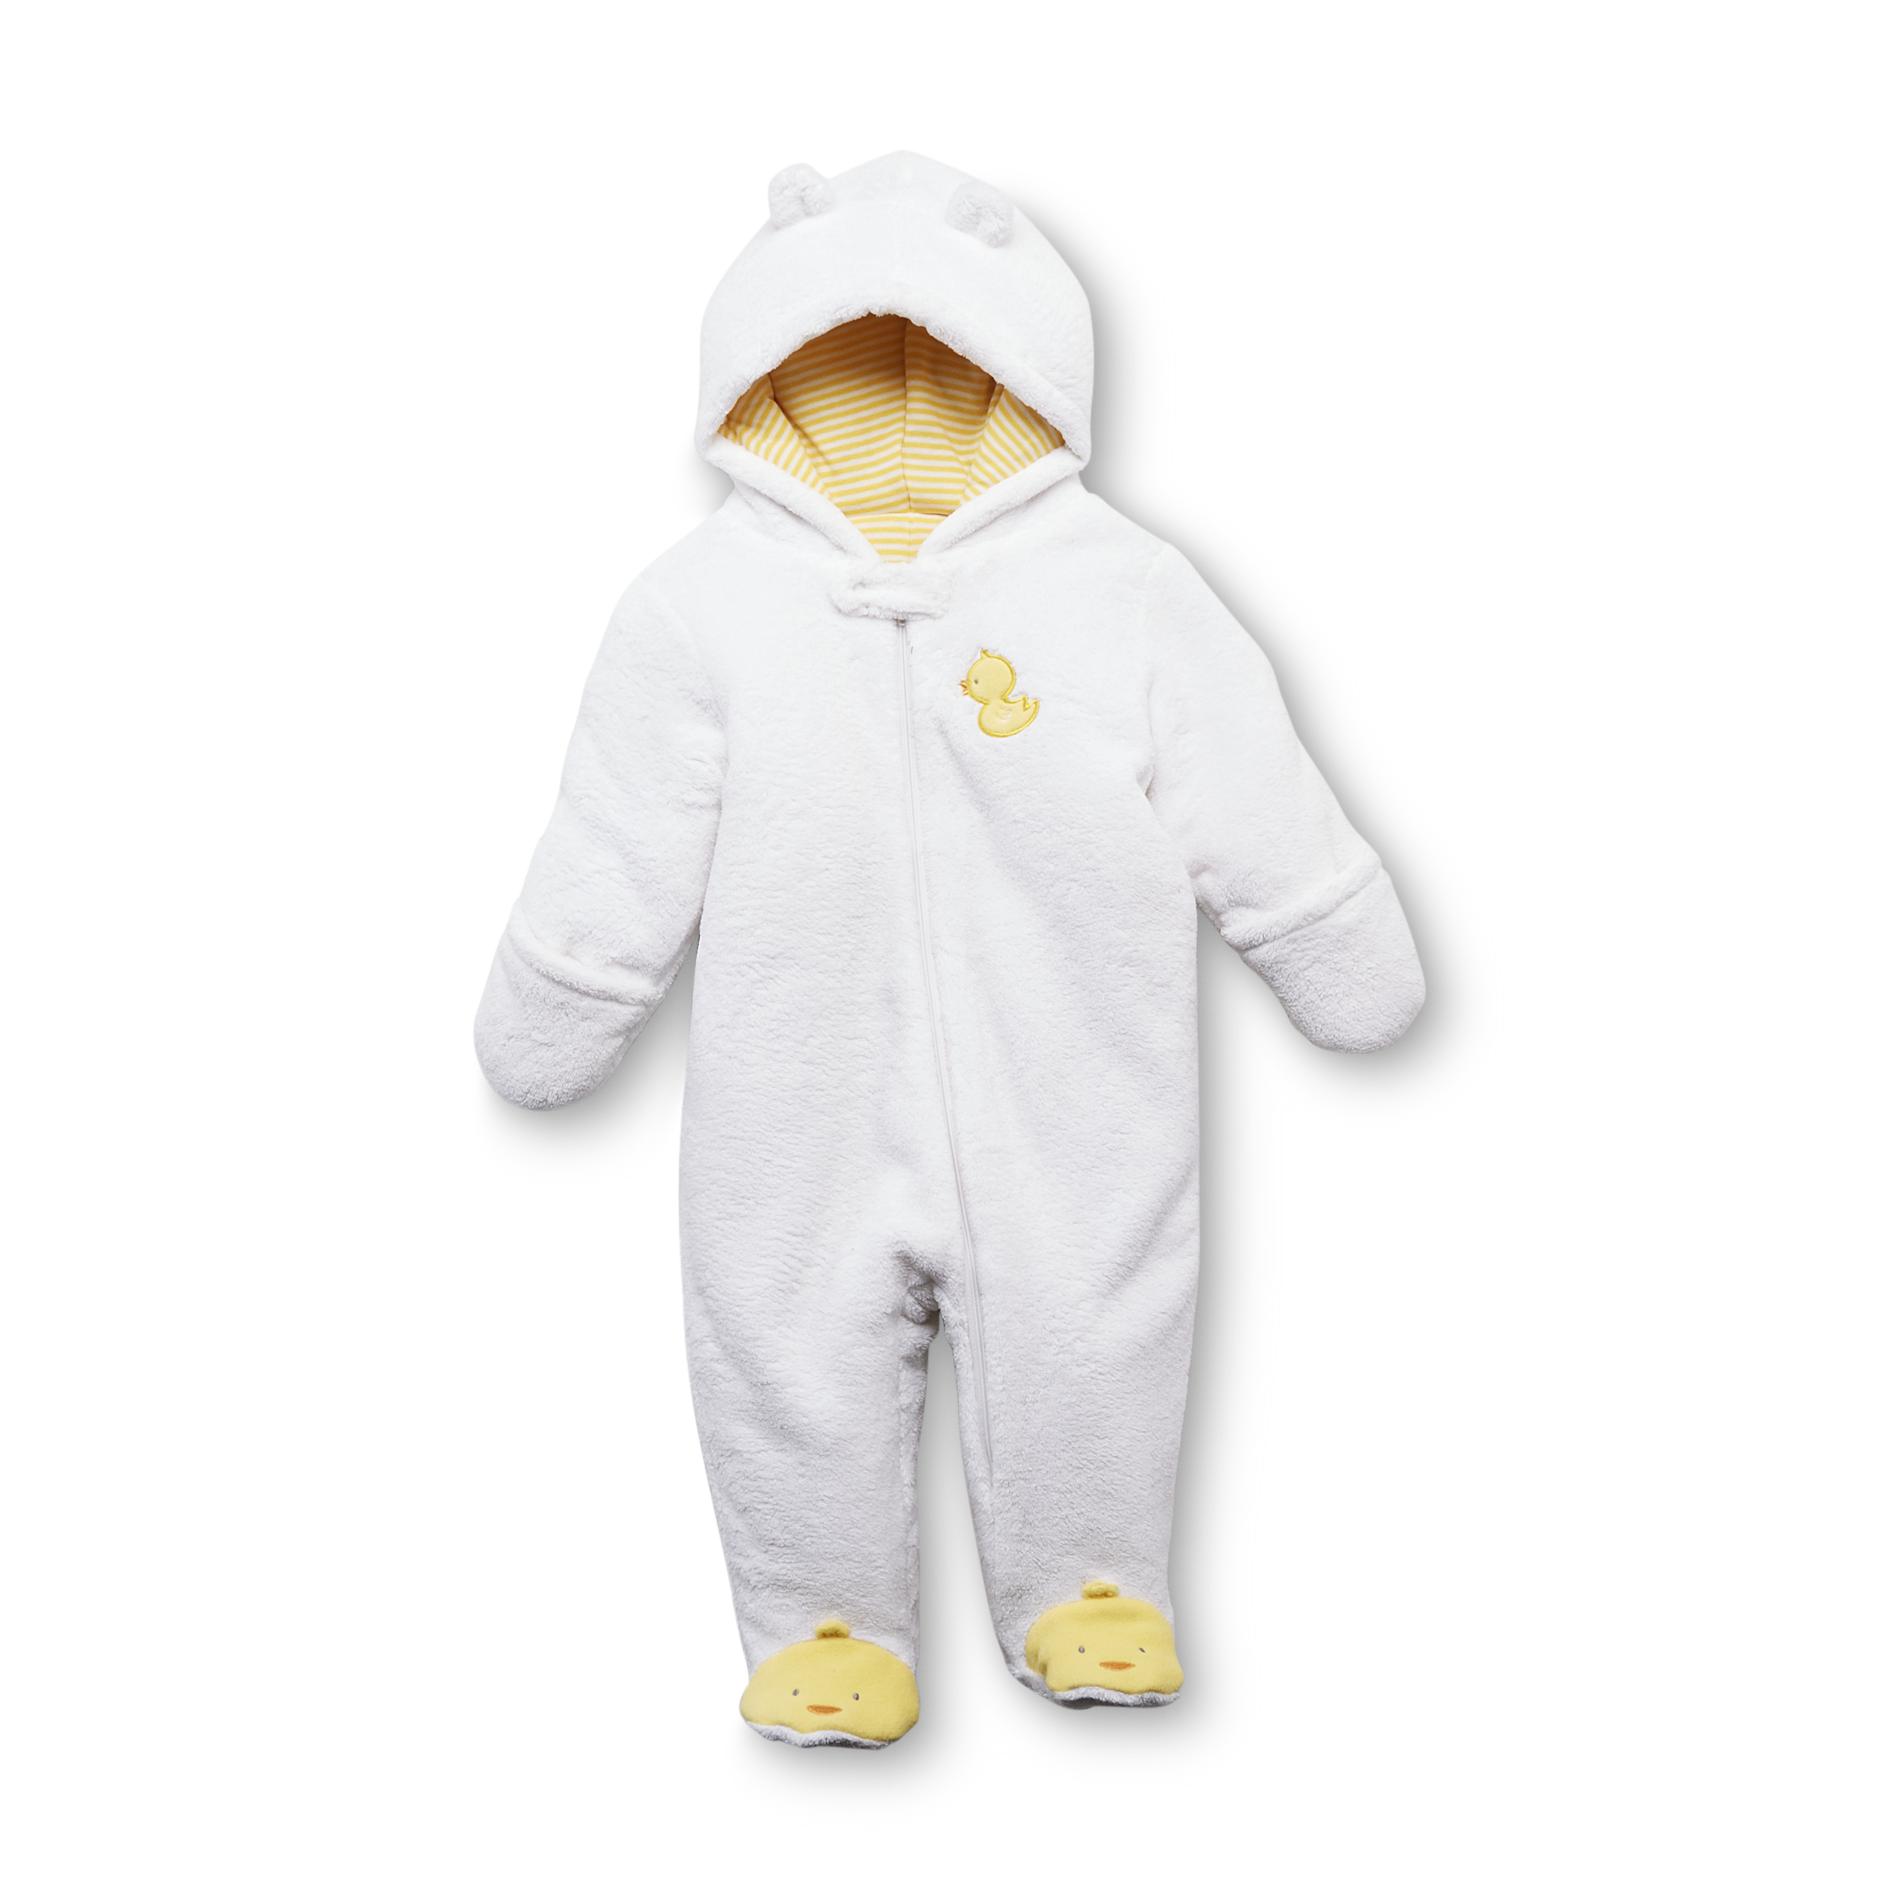 Little Wonders Newborn Boy's Hooded Pram Suit - Duck